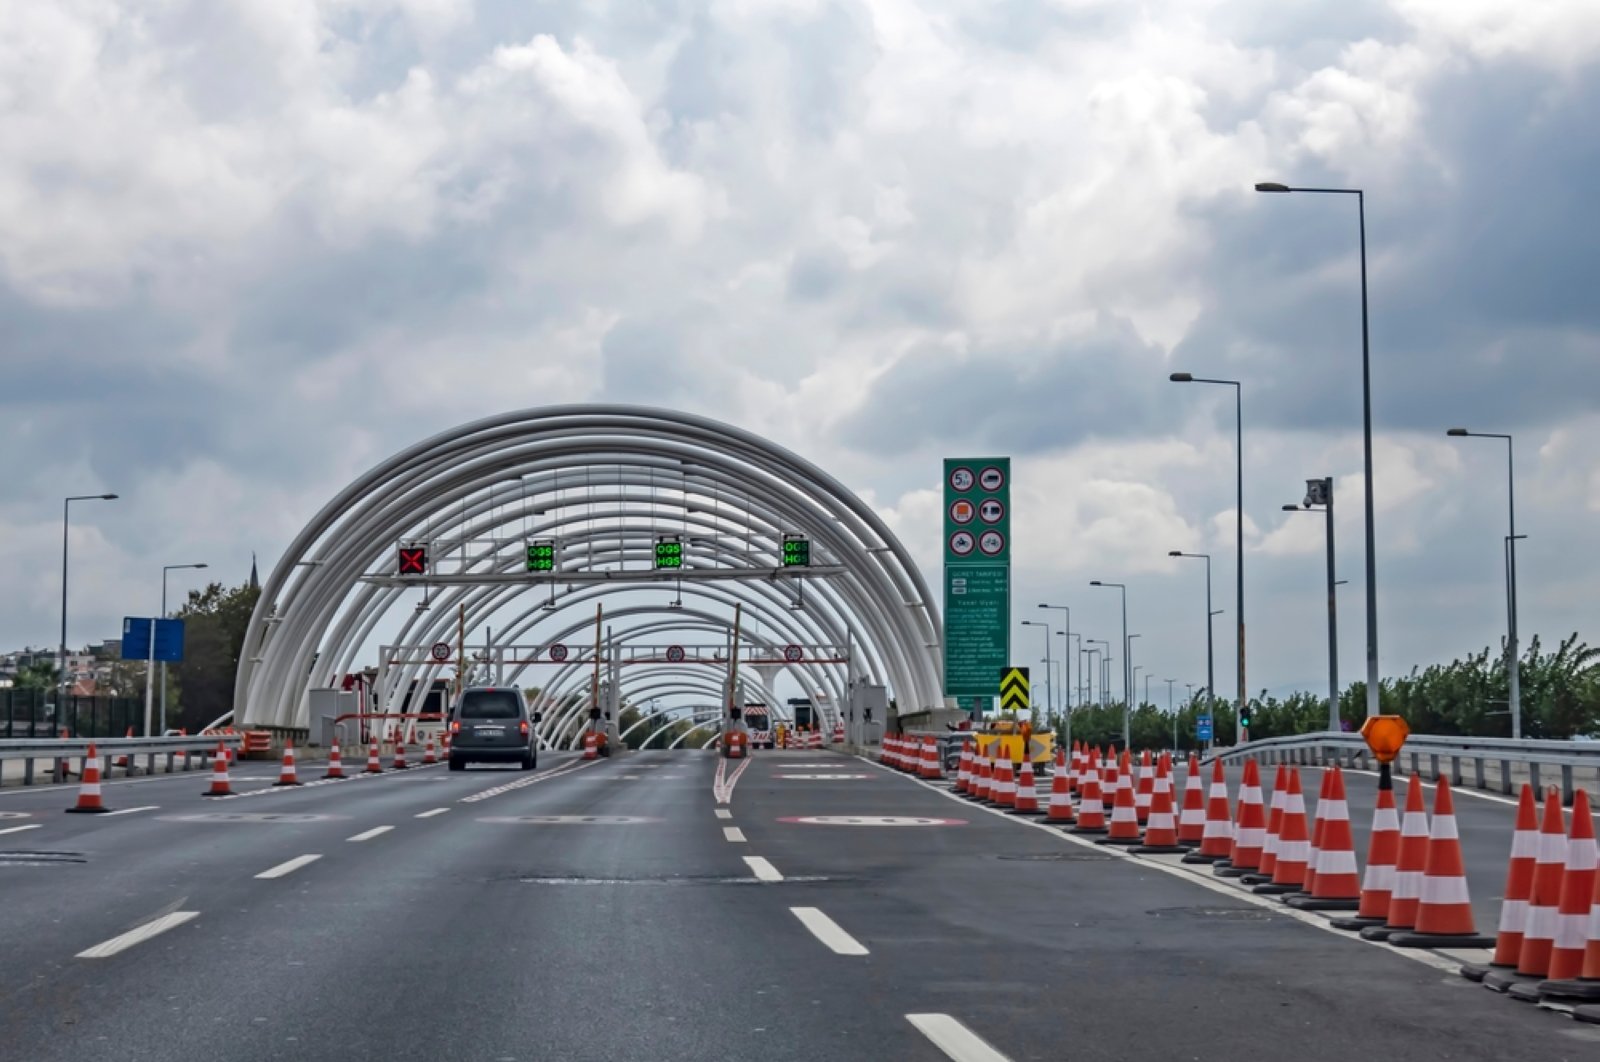 Türkiye aims to develop smart transportation infrastructure by 2028